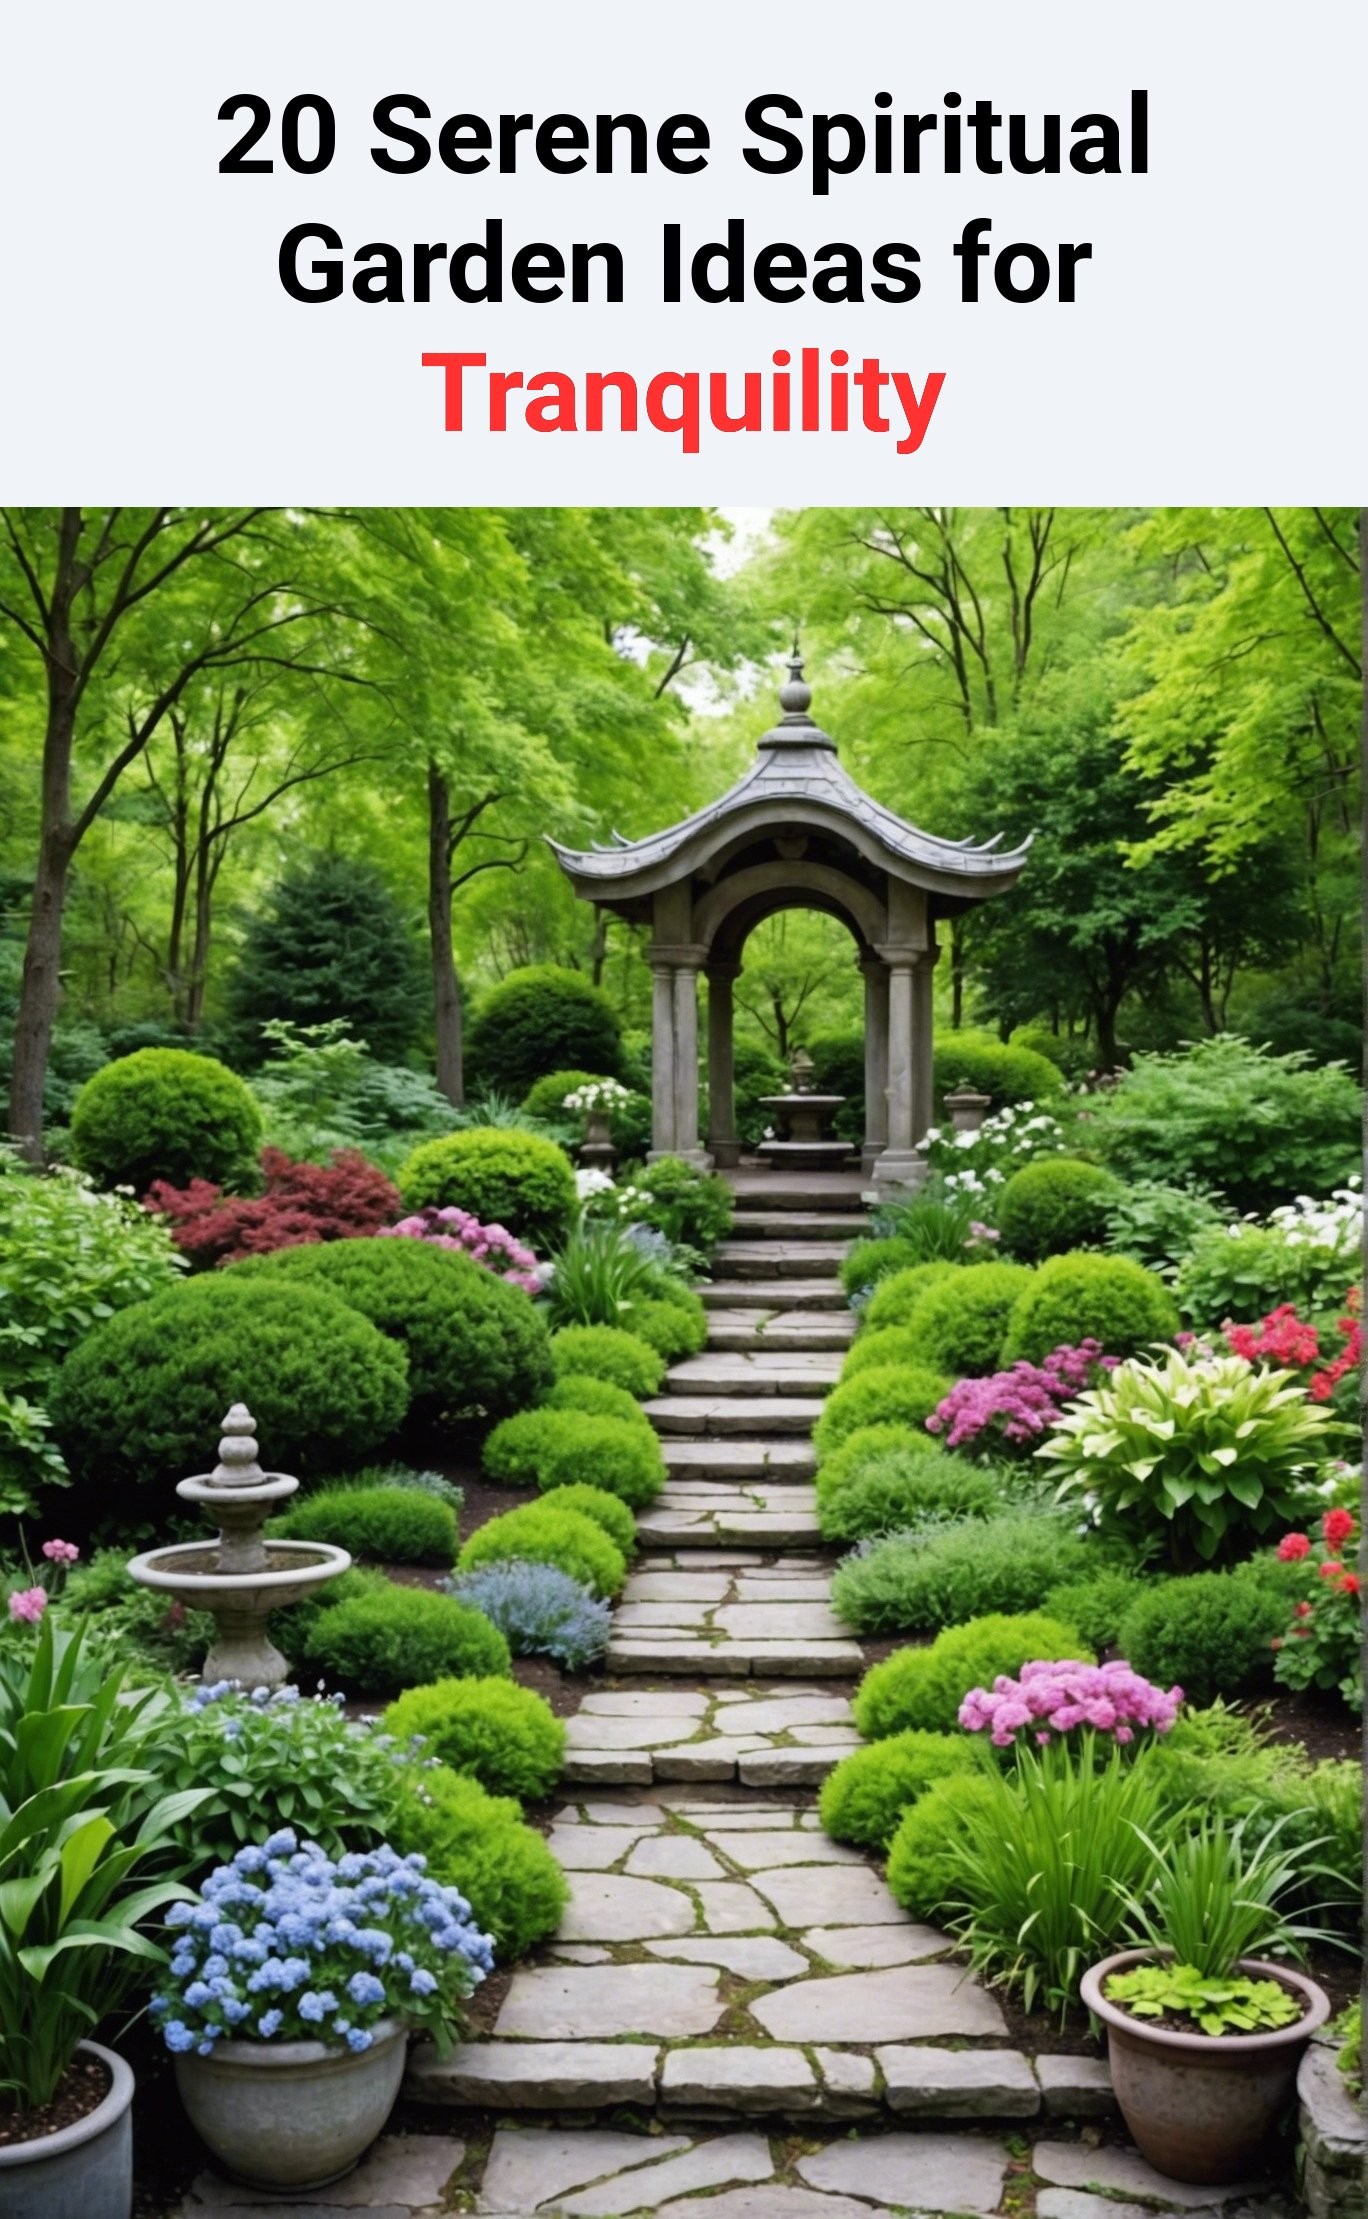 20 Serene Spiritual Garden Ideas for Tranquility